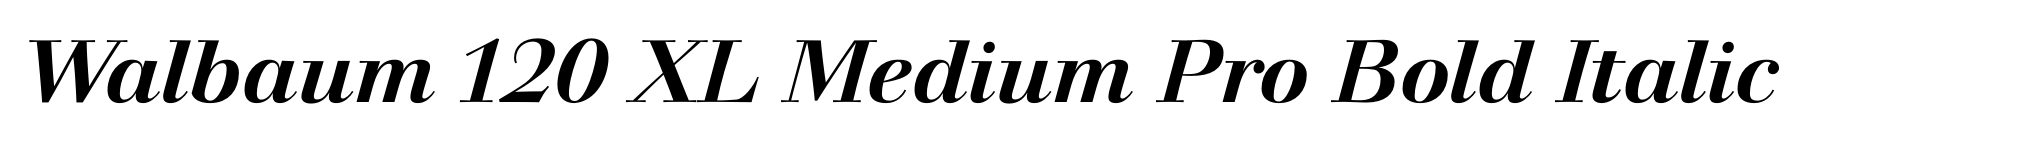 Walbaum 120 XL Medium Pro Bold Italic image